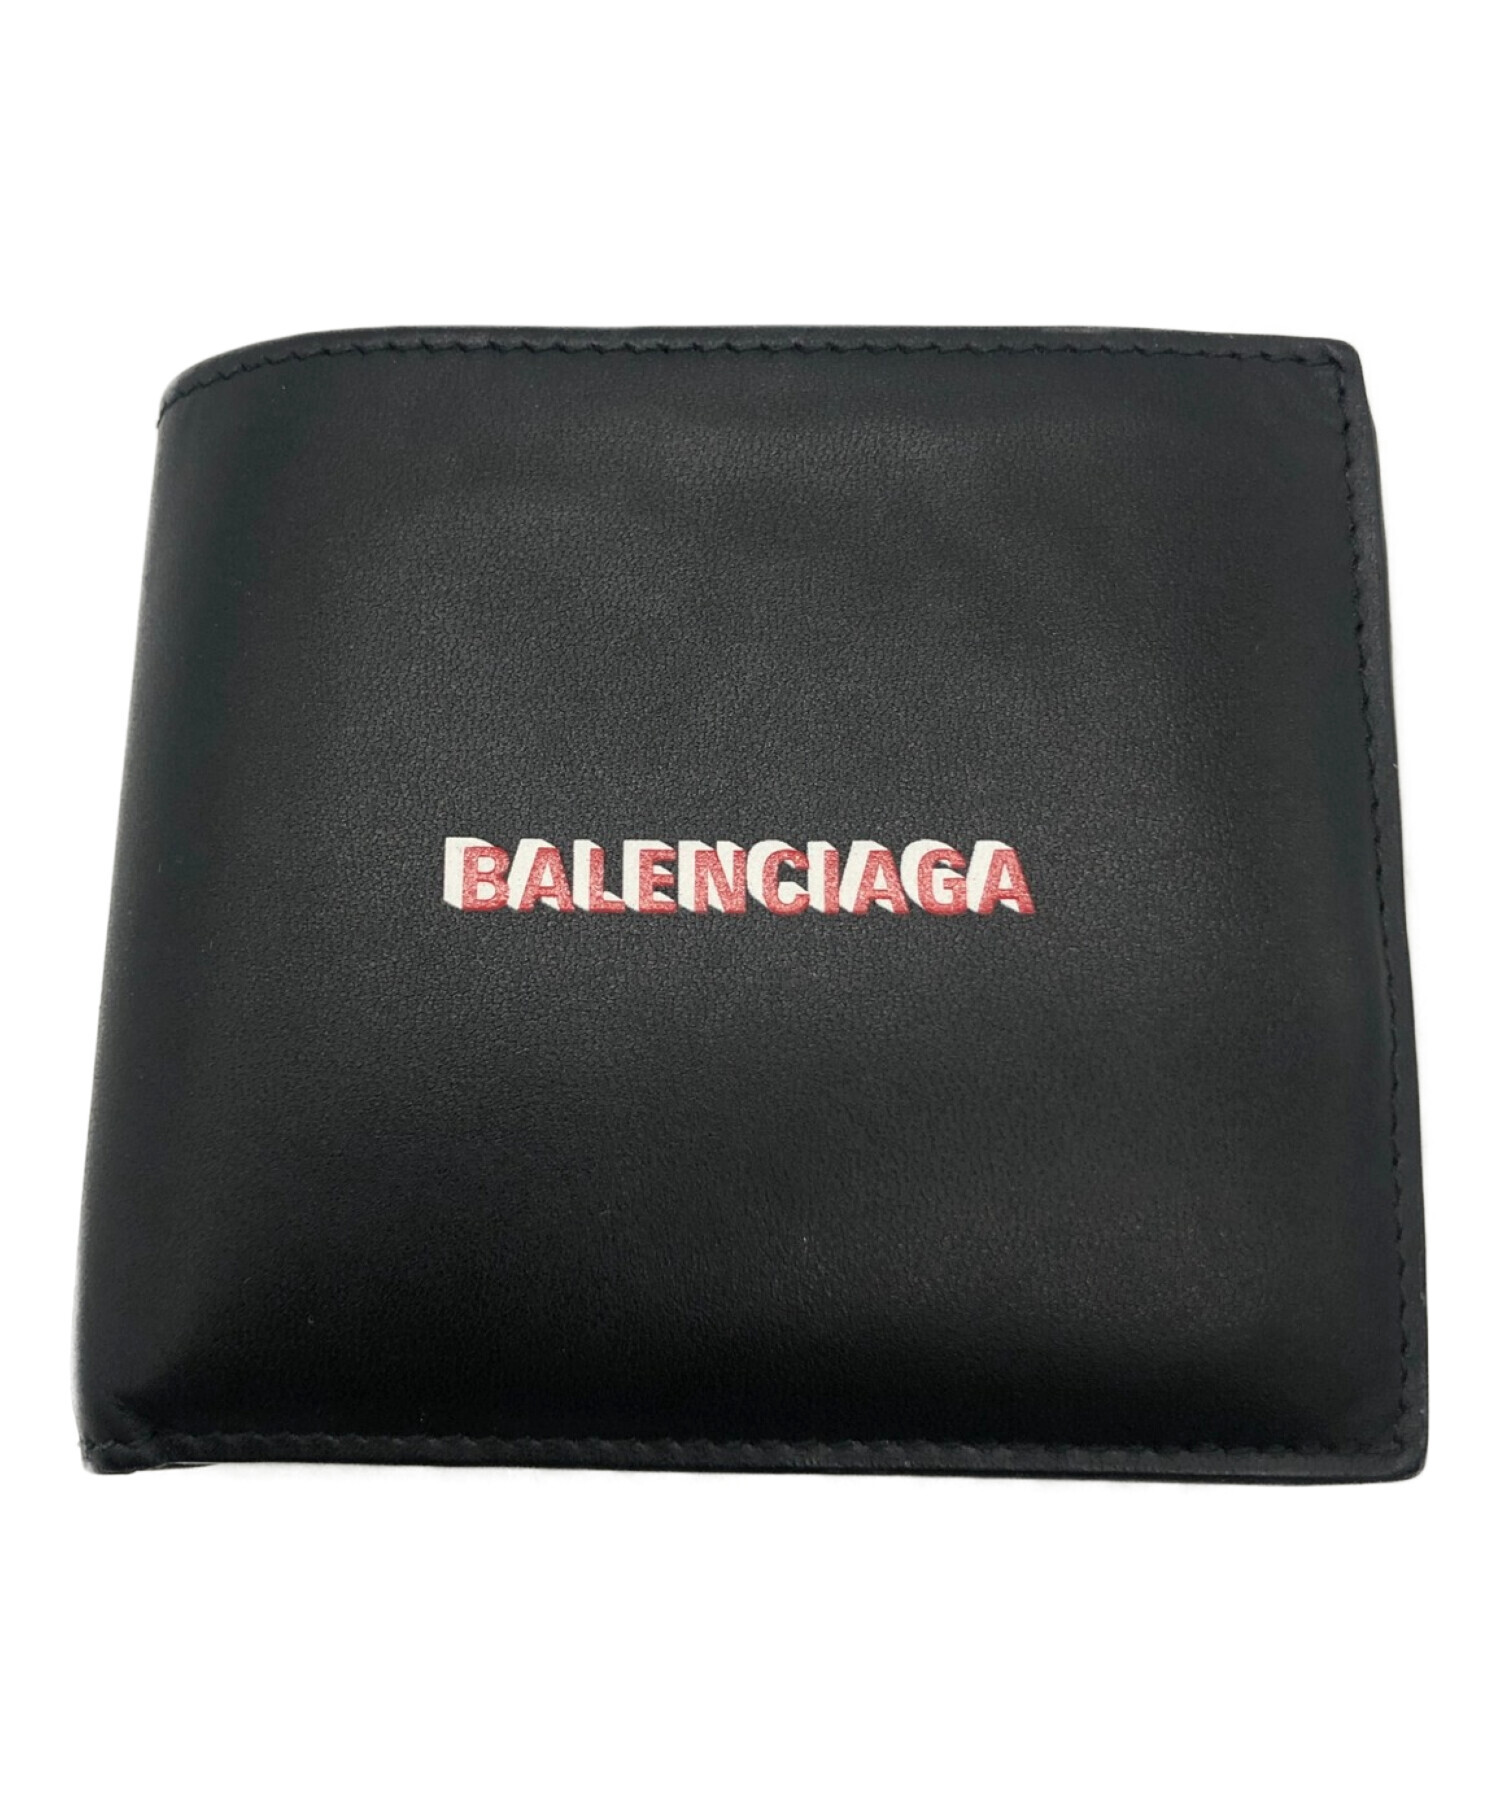 BALENCIAGA (バレンシアガ) 2つ折り財布 ブラック